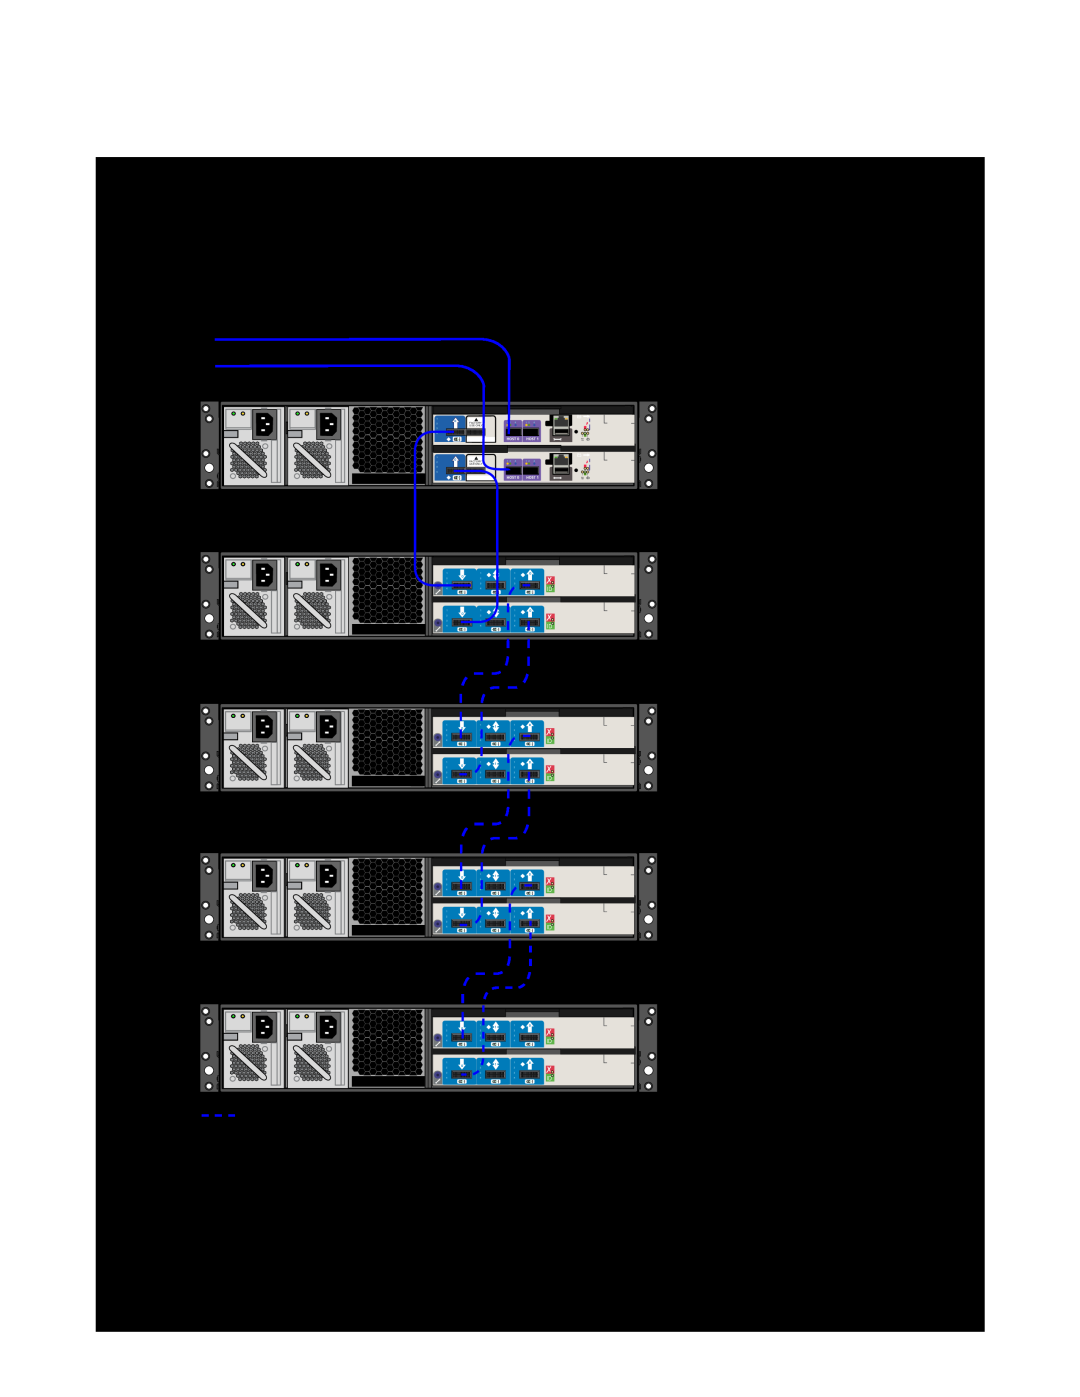 HP Z800 manual XR 6412 Wiring Diagrams, Single XR 6412 RAID enclosure, 2 loops, Connecting Storage 